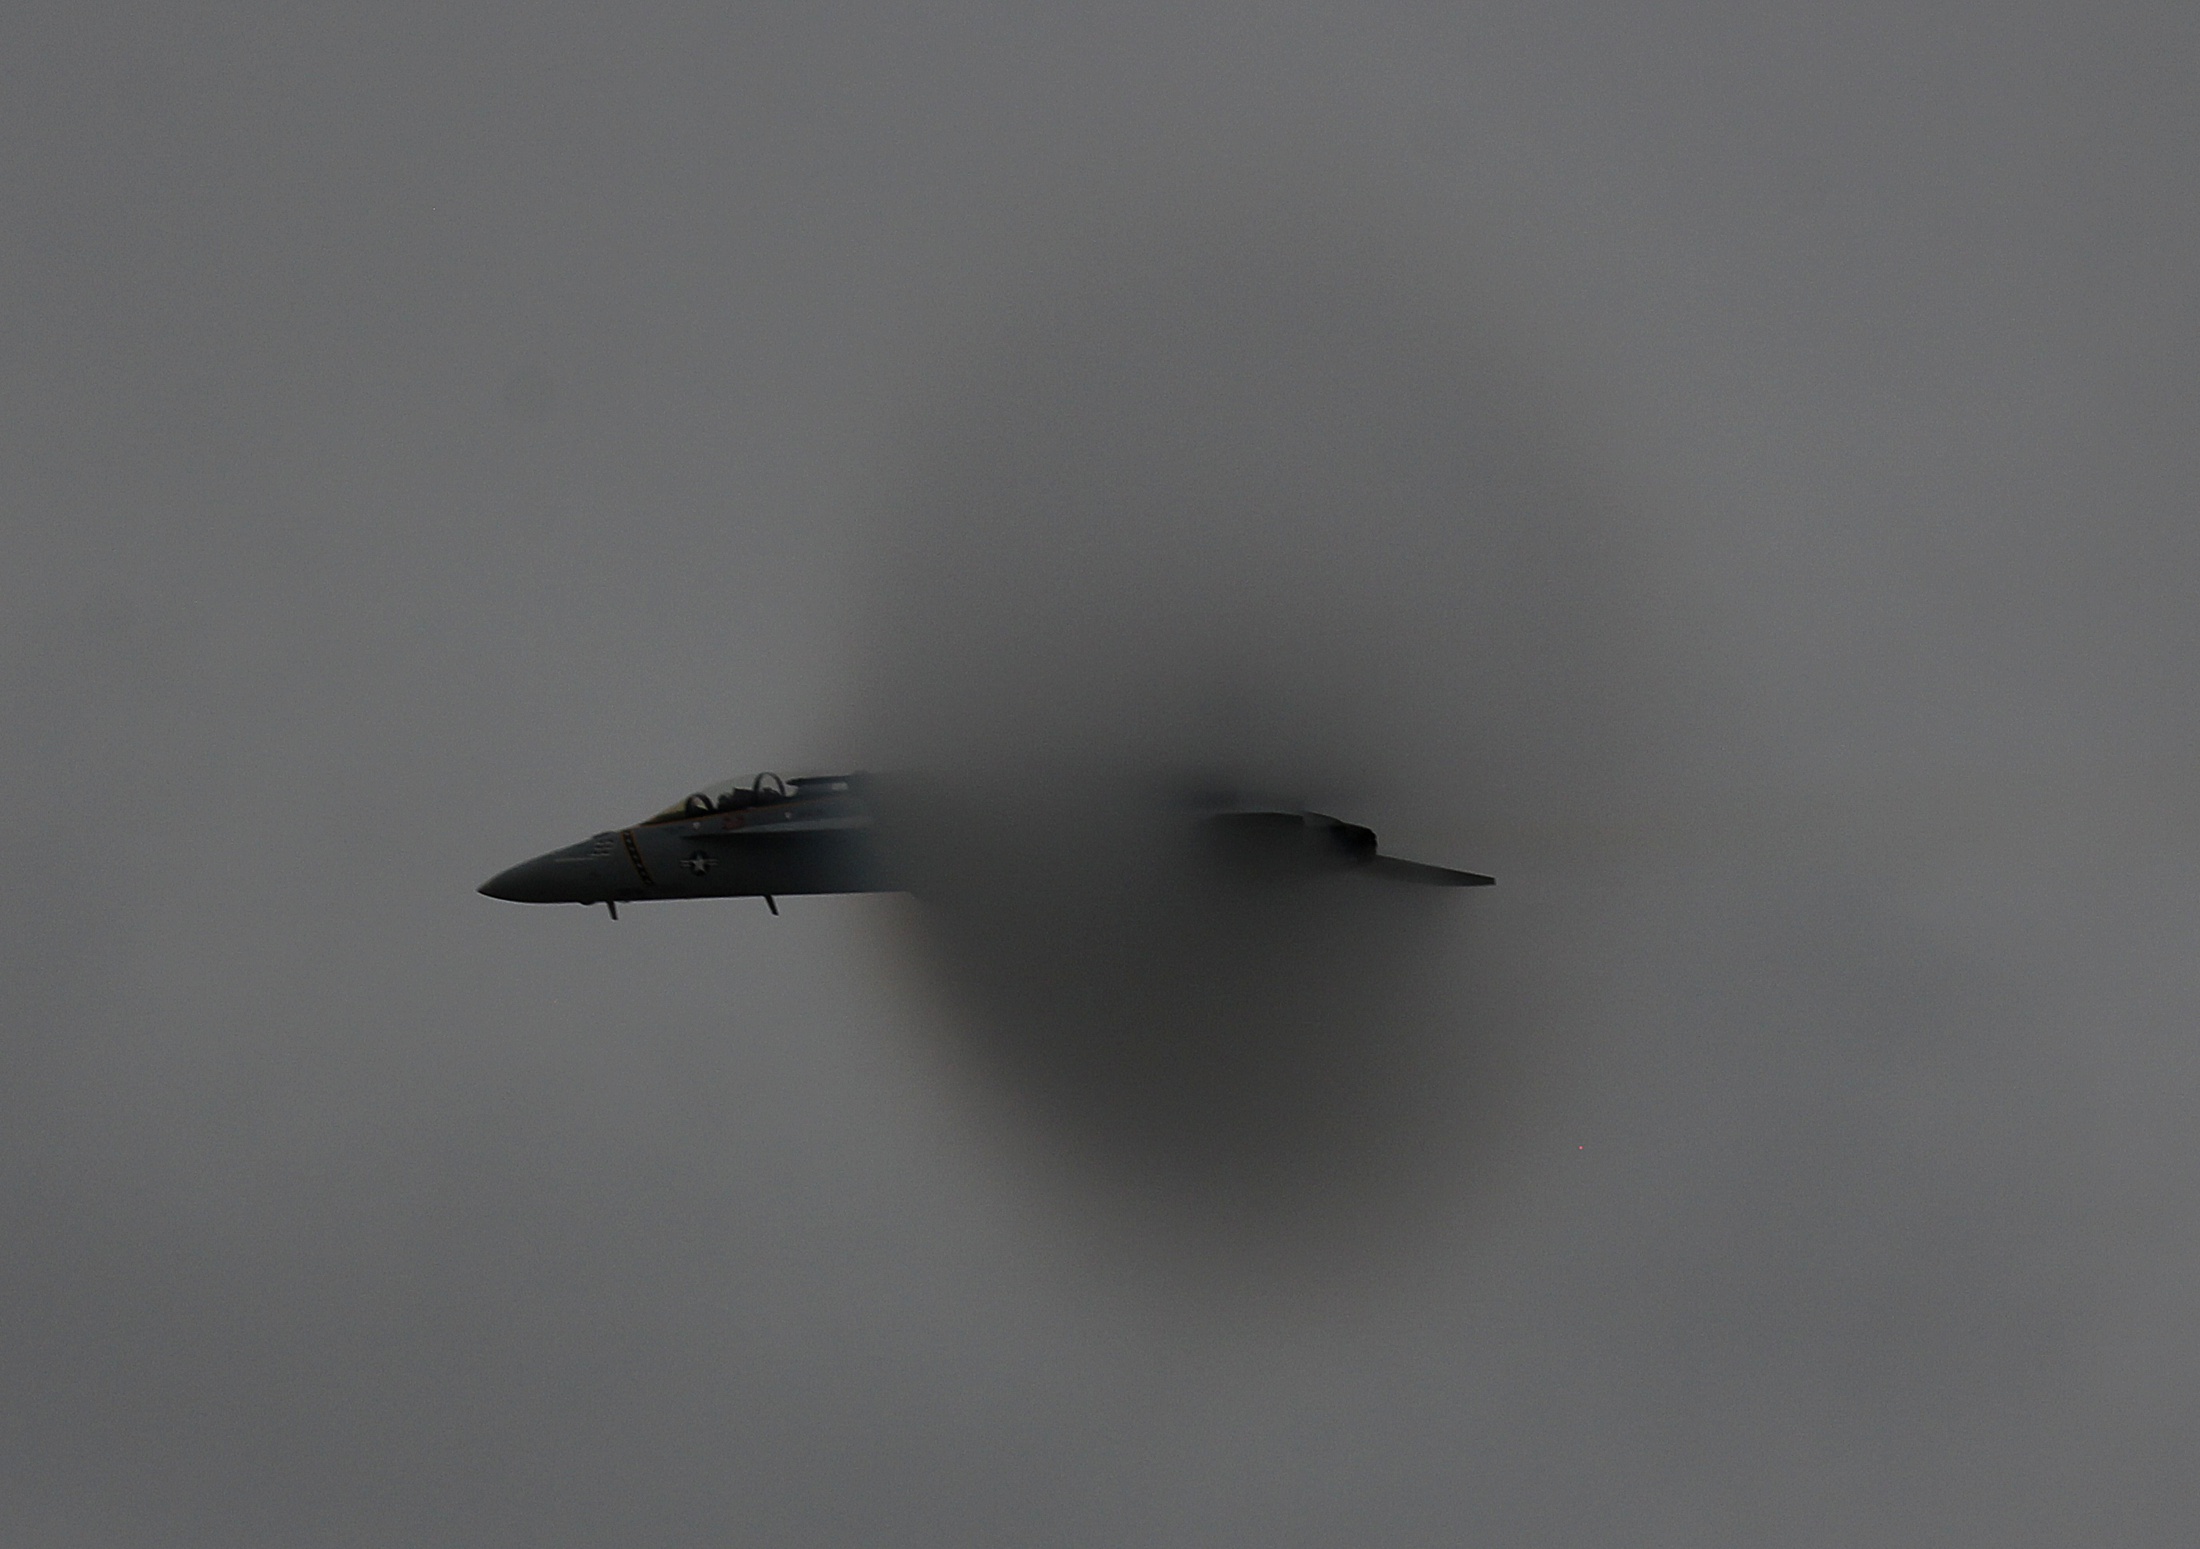 F18 fighter jet breaking hte sound barrier...